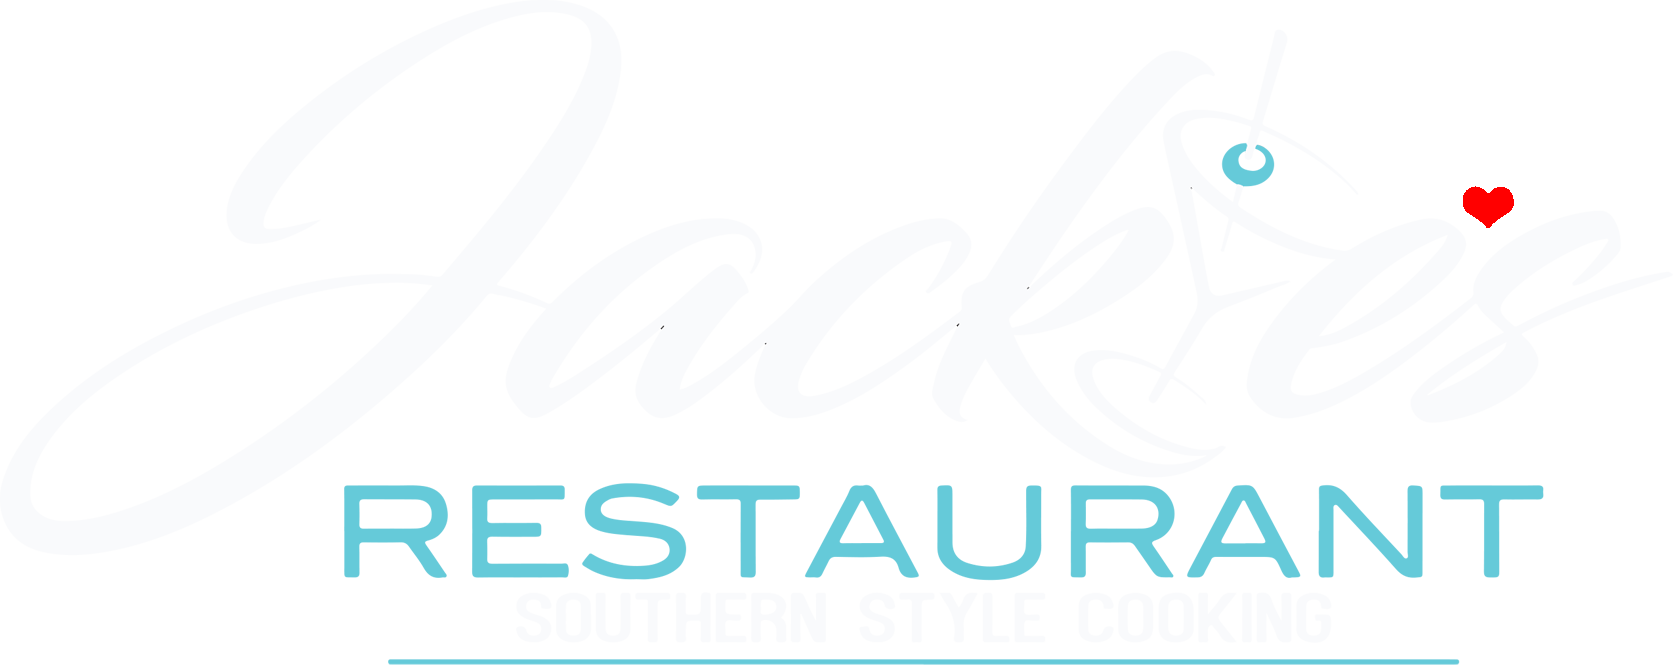 Jackie's Restaurant